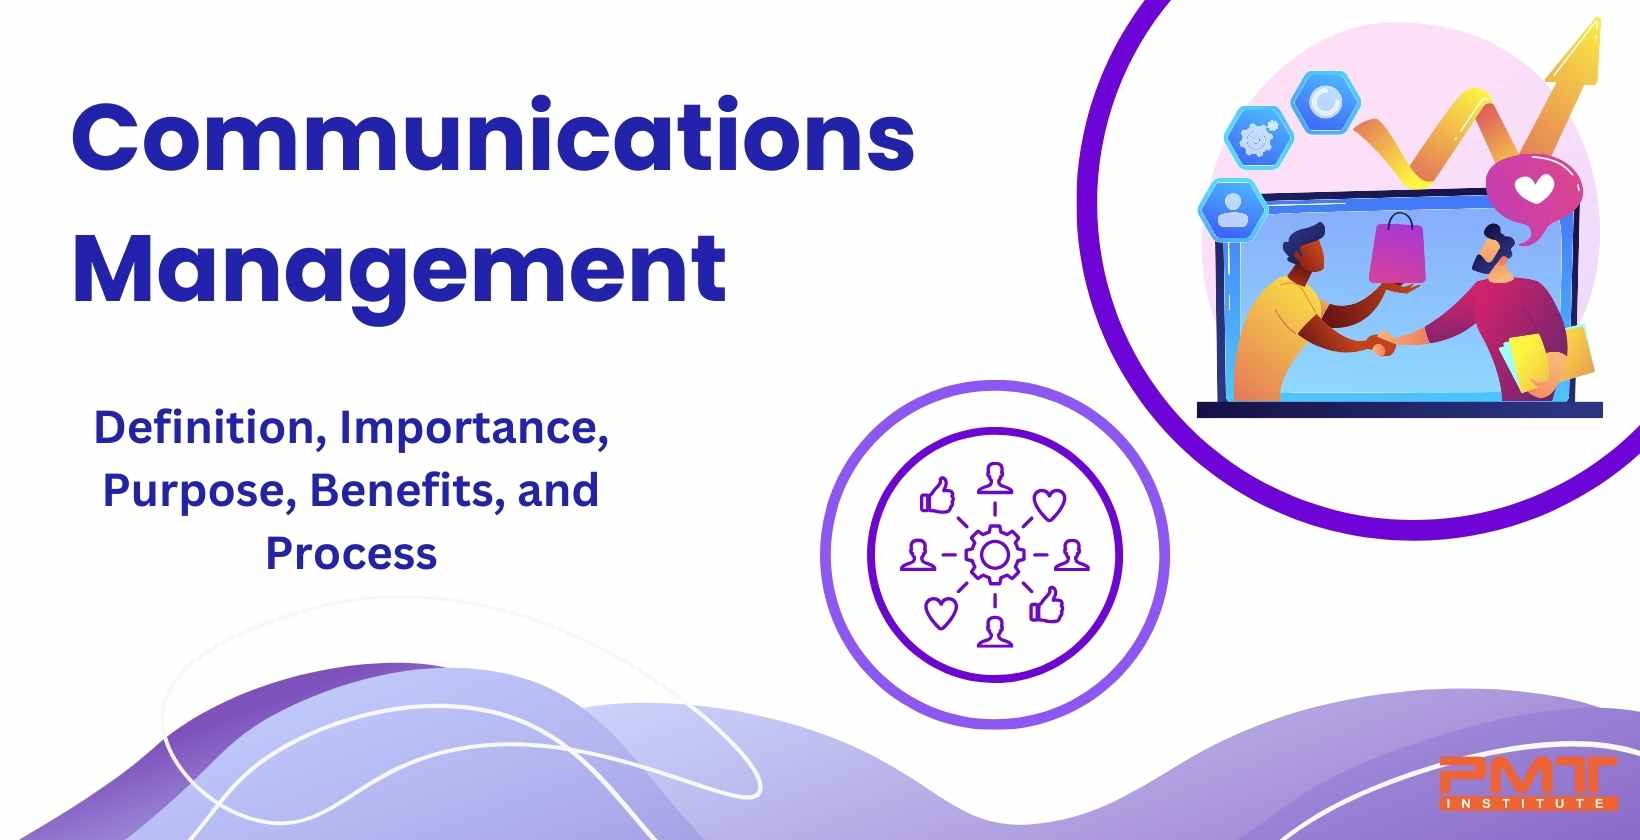 Communication management: Definition, Importance, Purpose, Benefits, and Process